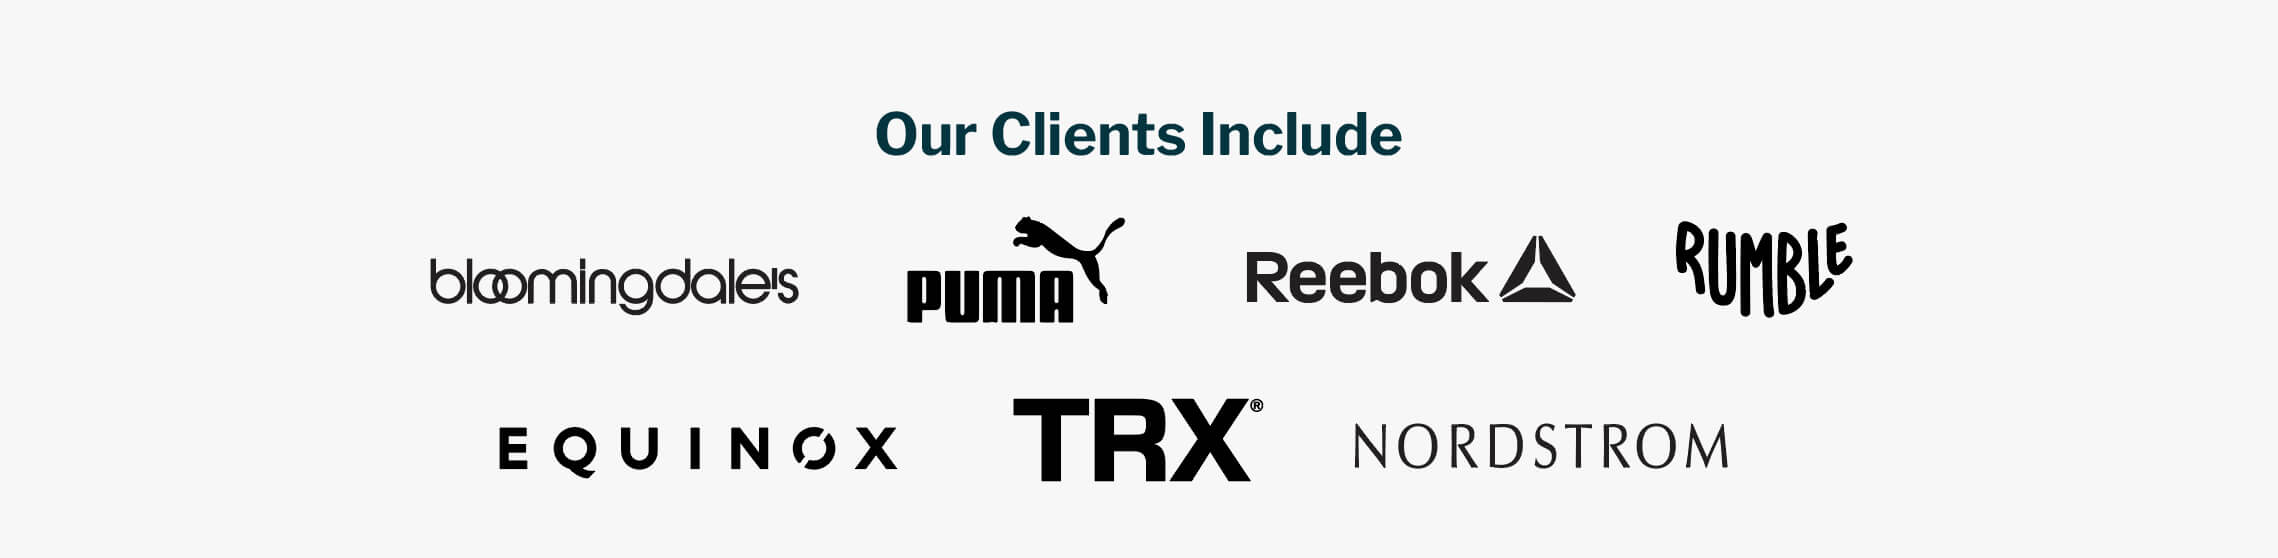 Our clients: Bloomingdales, puma, reebok, rumble, equinox, trx, Nordstrom.